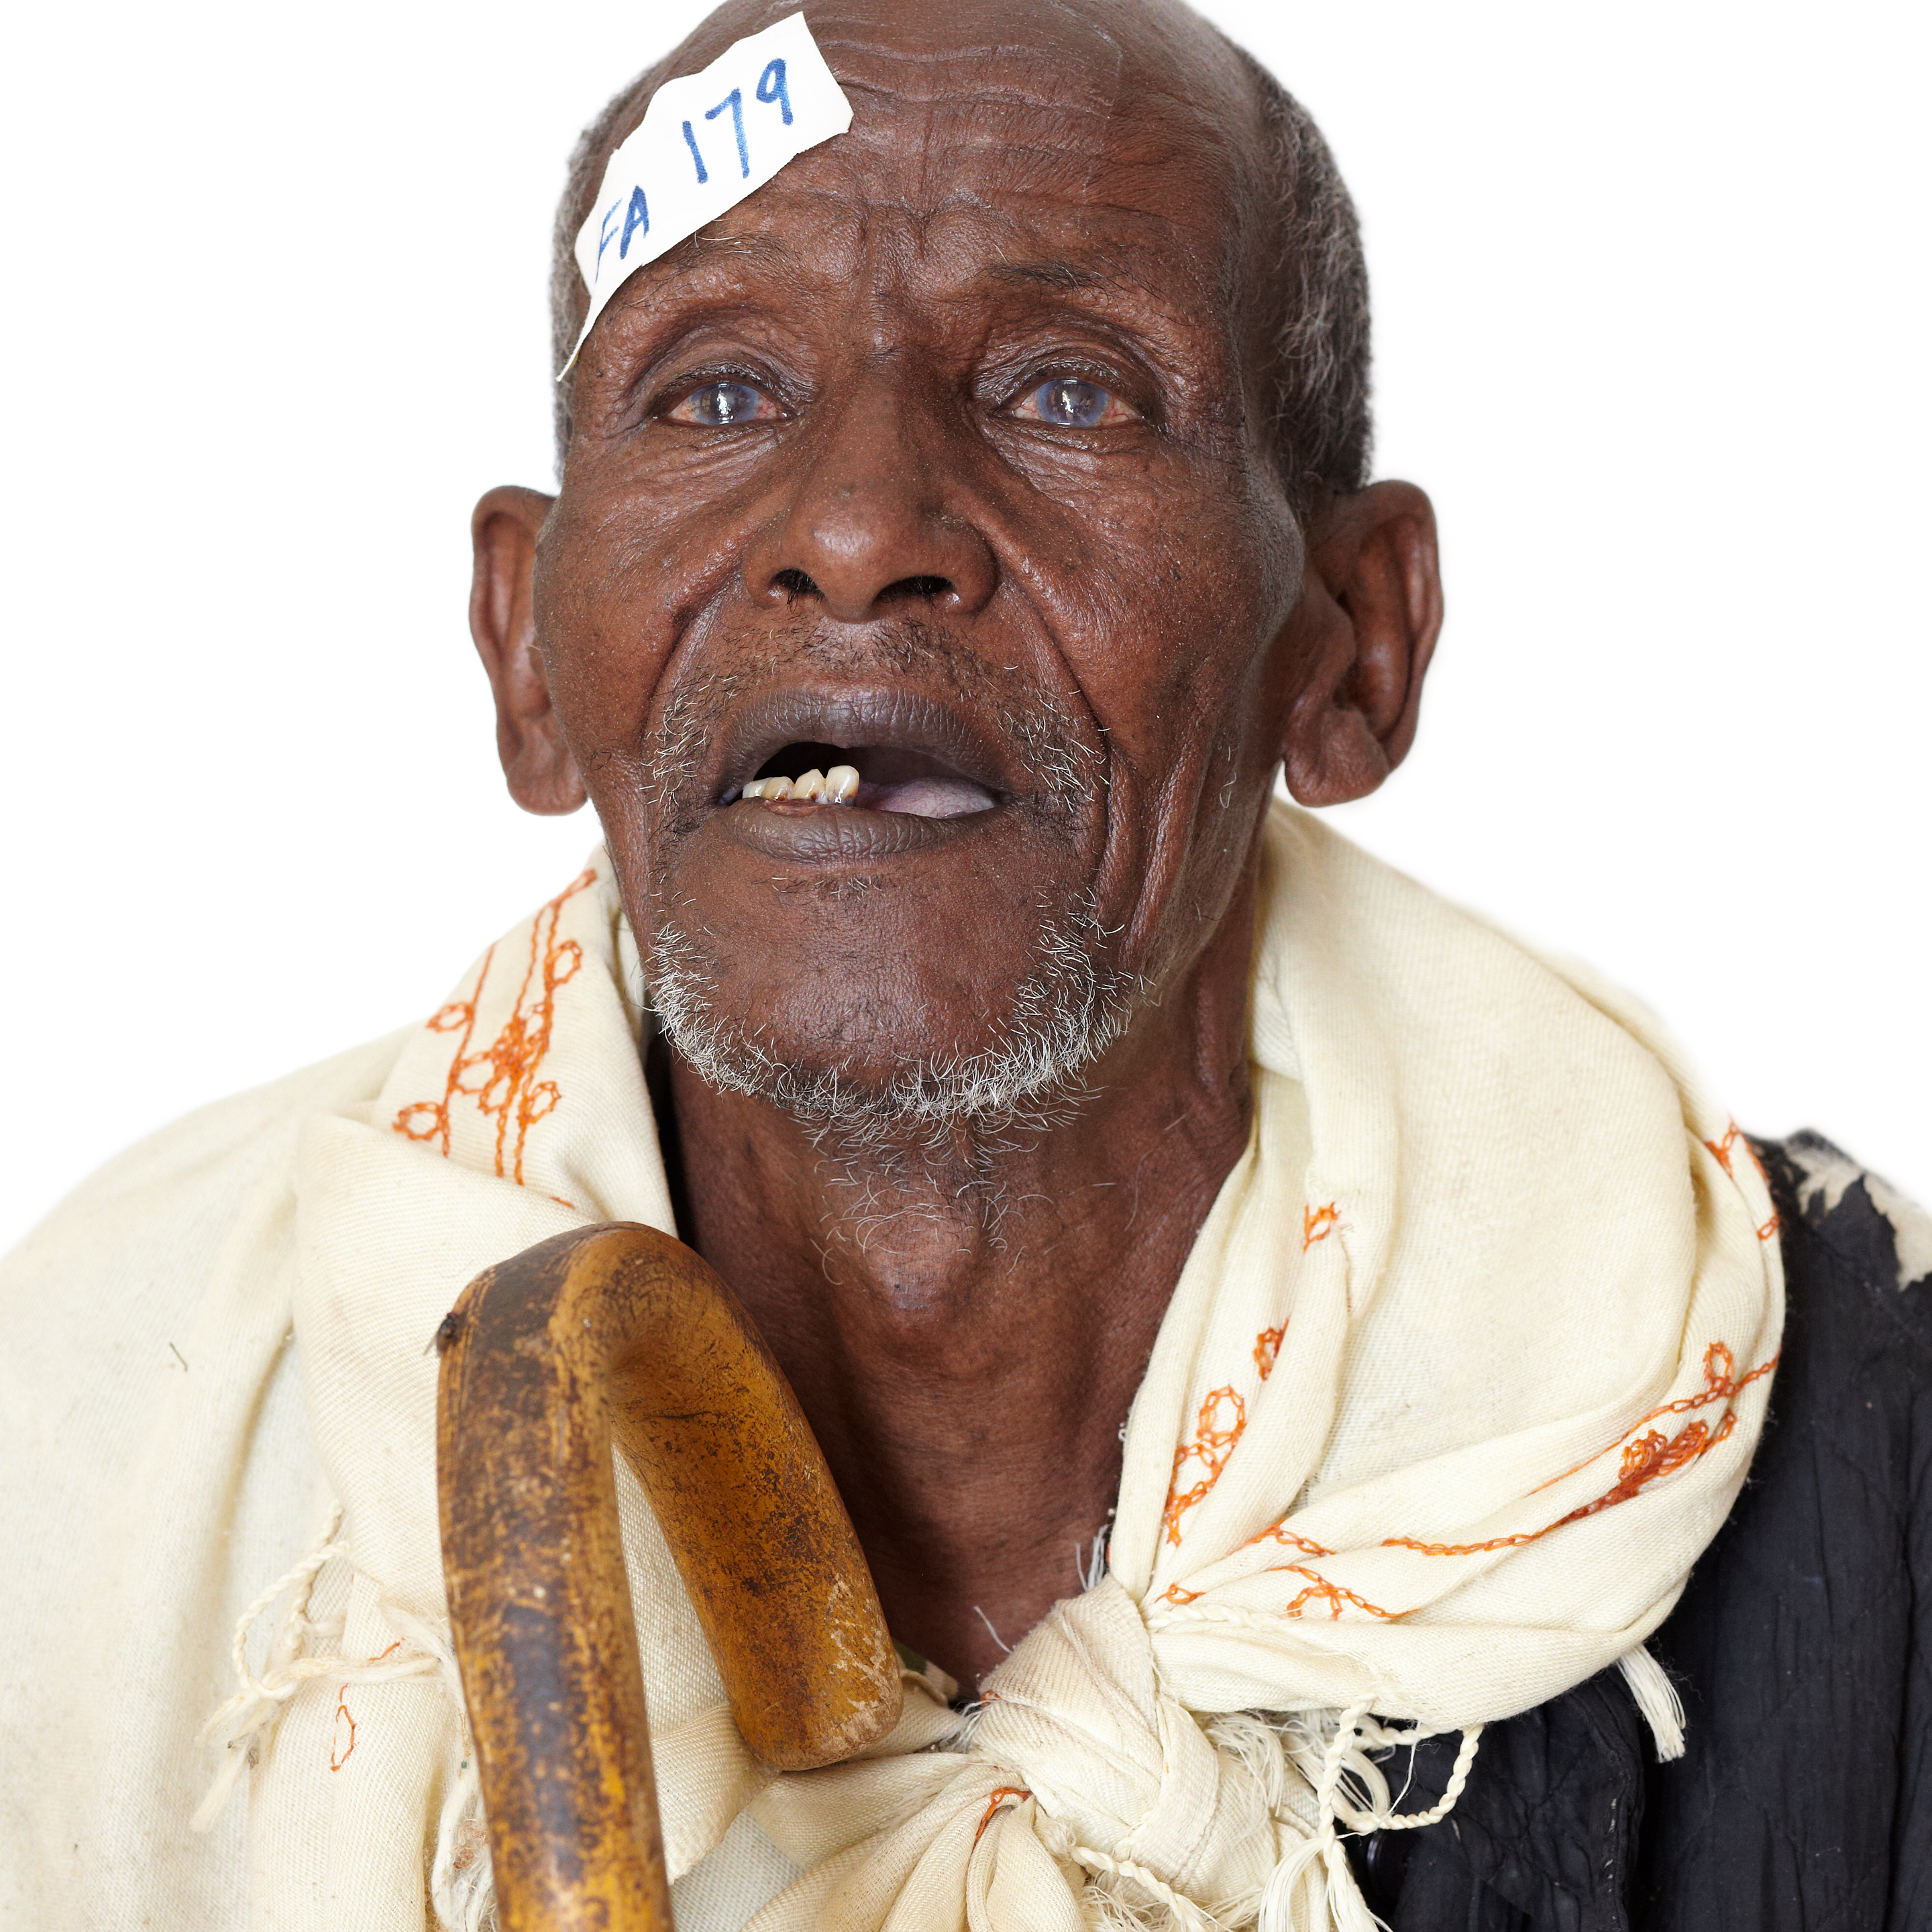 Ethiopia portrait cataract surgery.